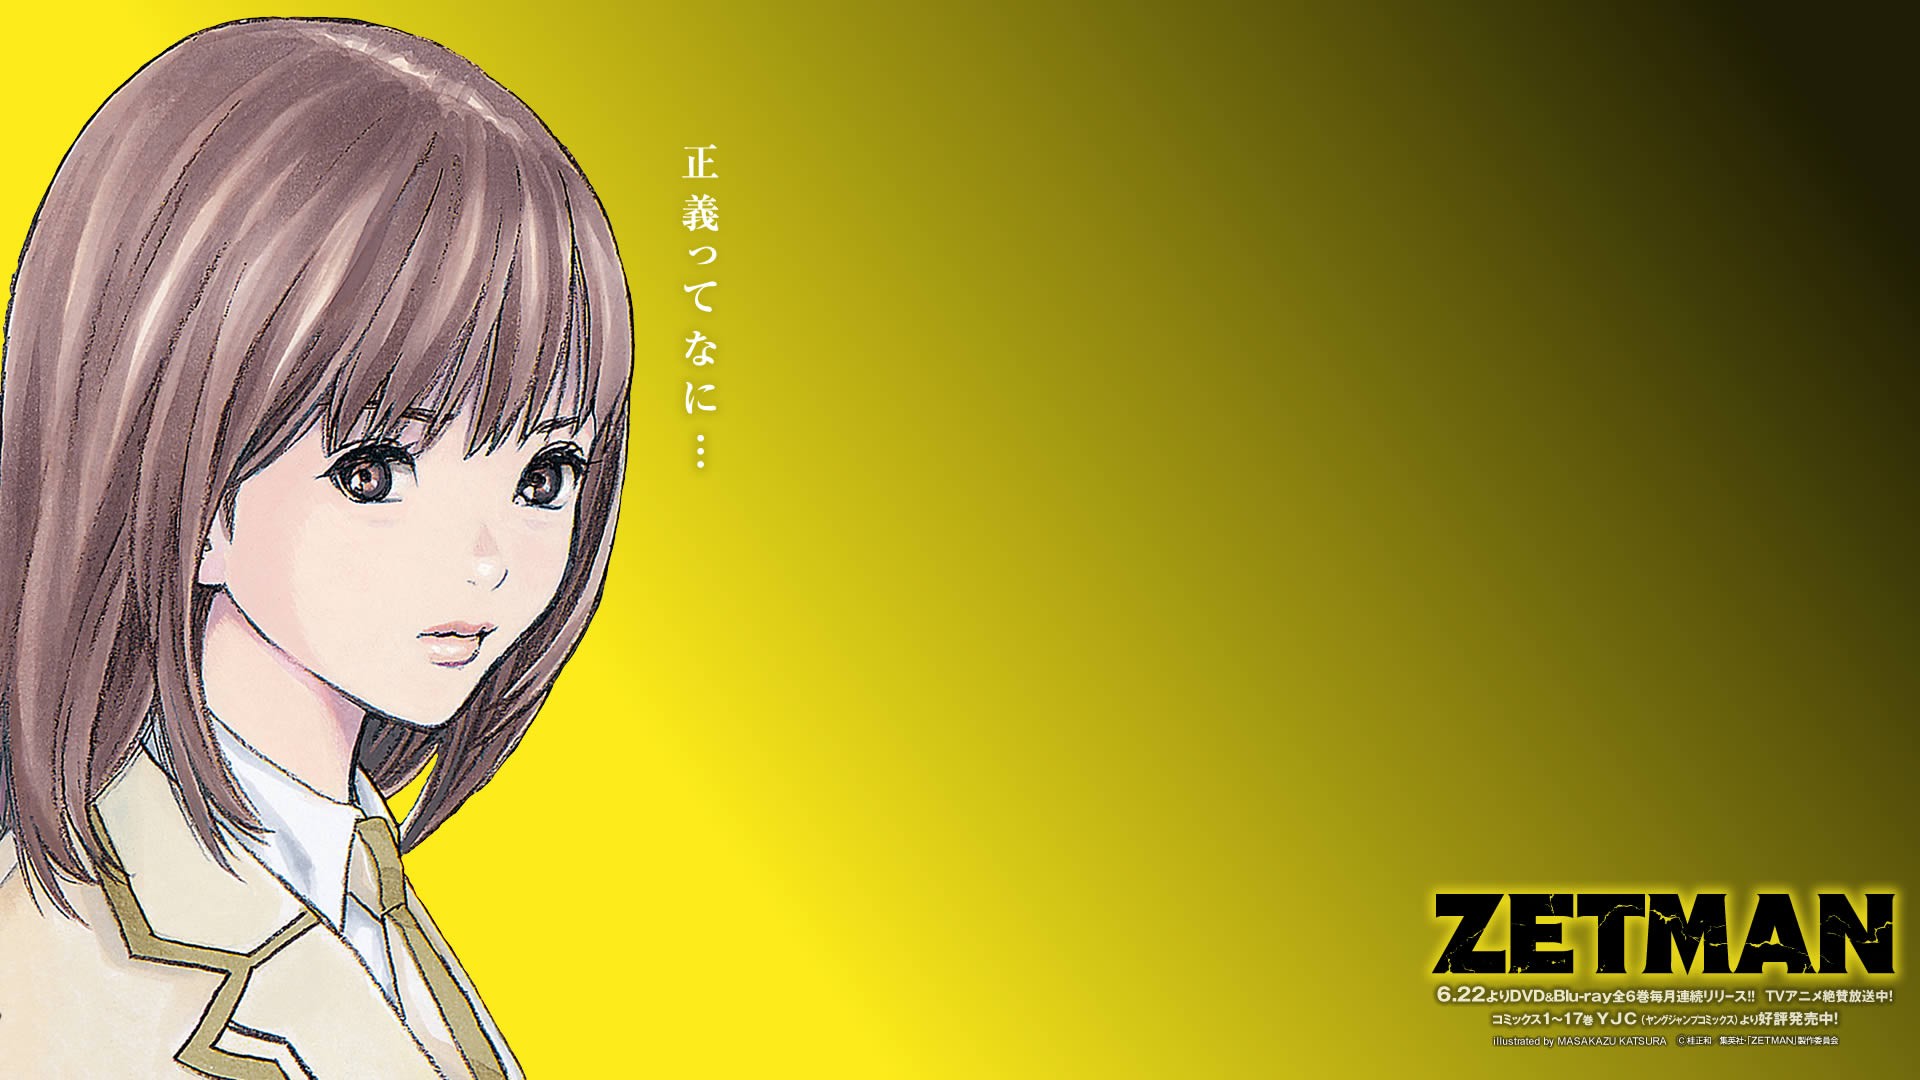 Anime 1920x1080 Zetman Masakazu Katsura anime girls anime yellow background gradient simple background face